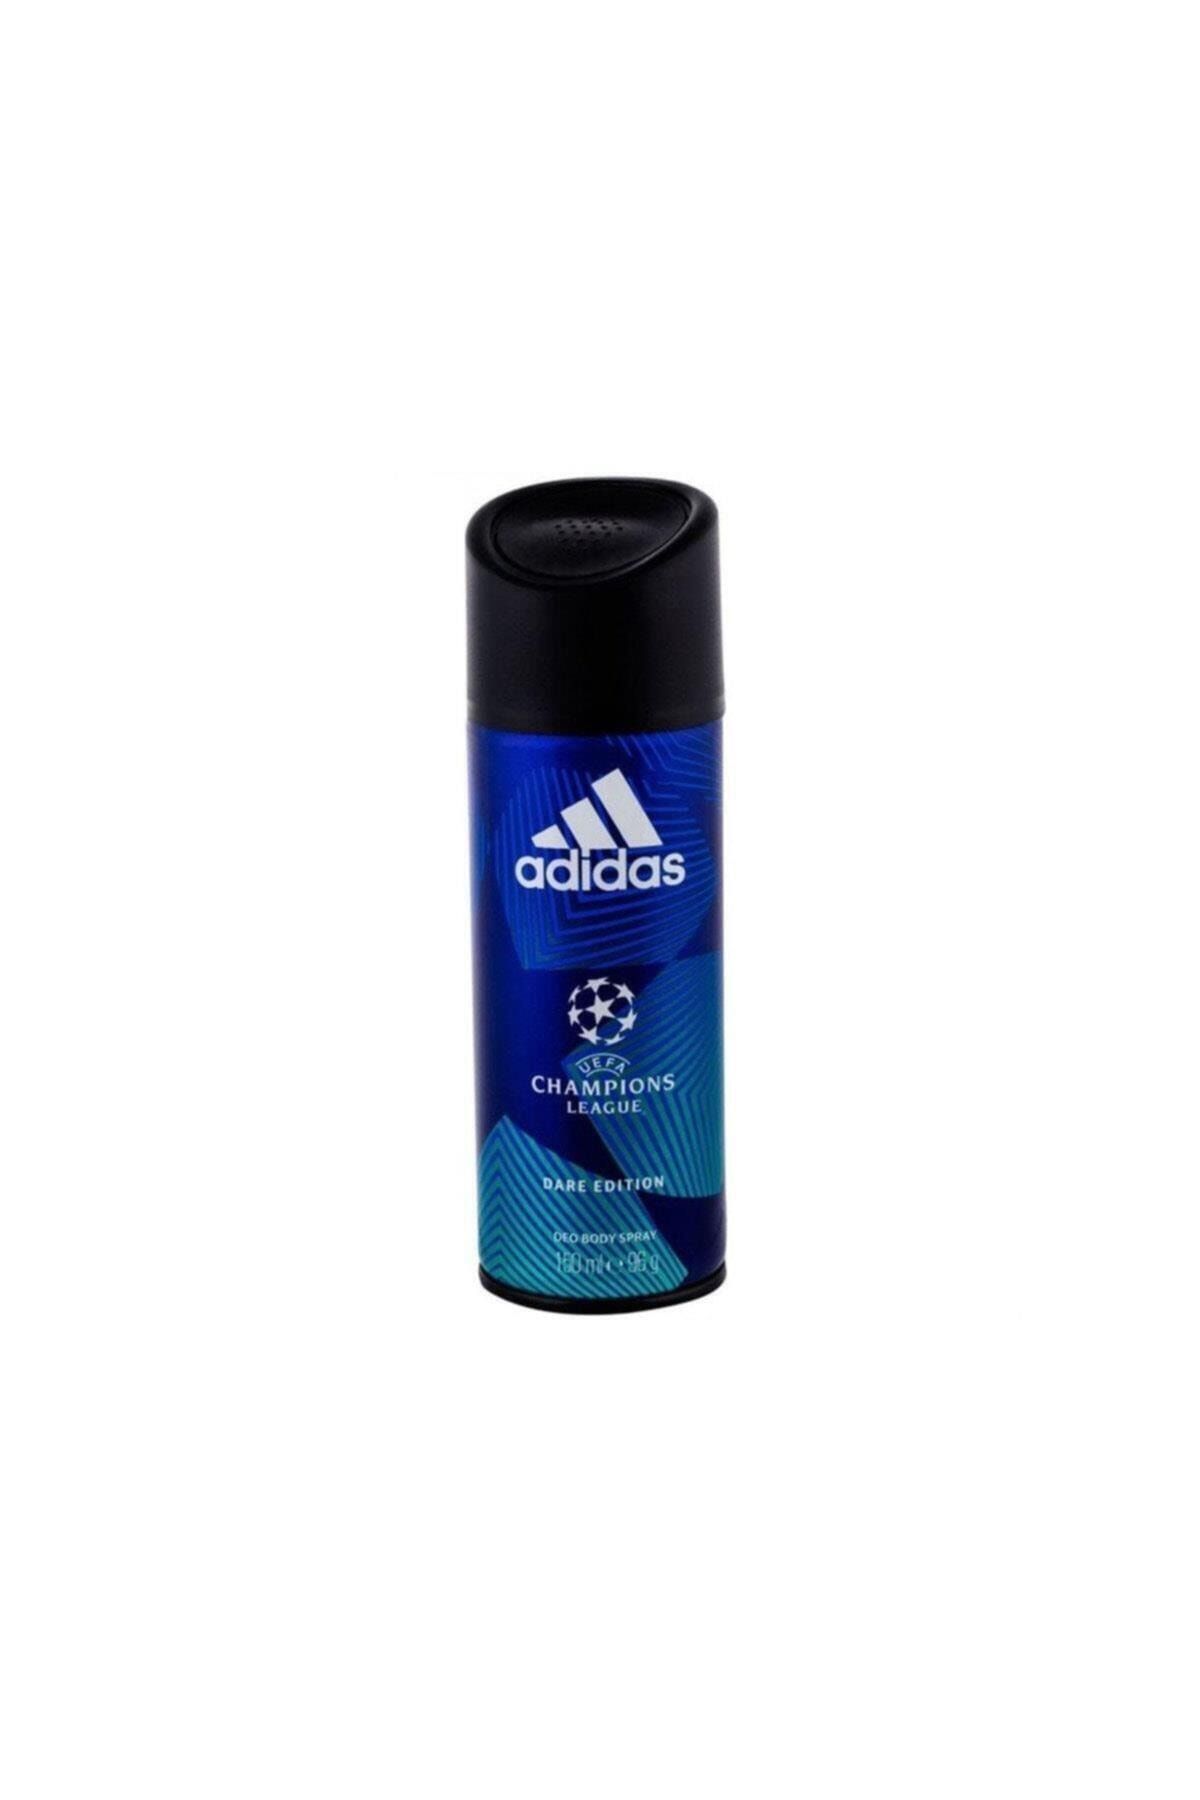 adidas Champions League Dare Edition Deodorant 150 ml